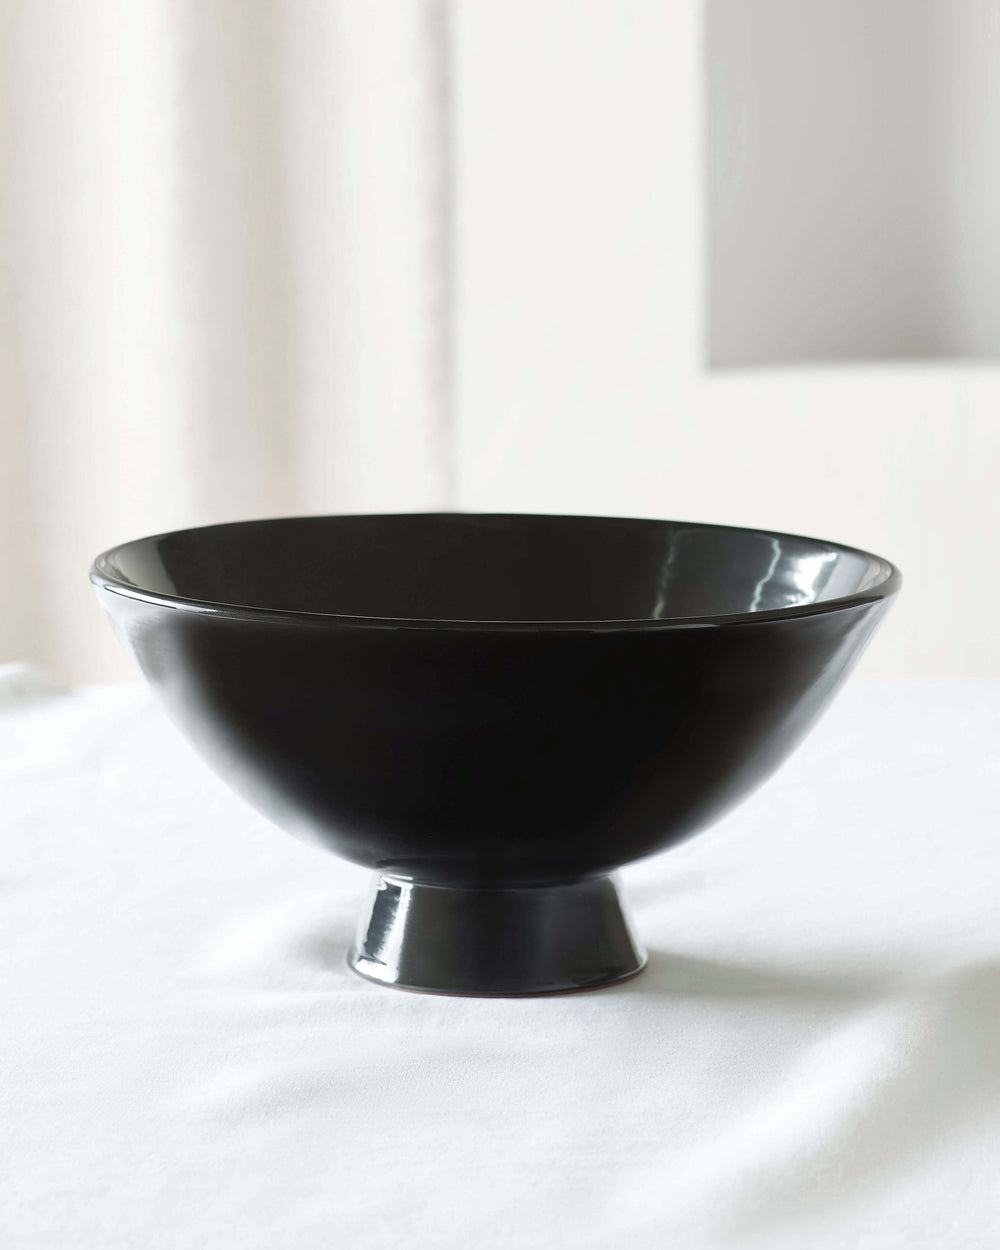 Rami Pedestal Bowl in Black, handmade by artisans in Safi, Morocco.